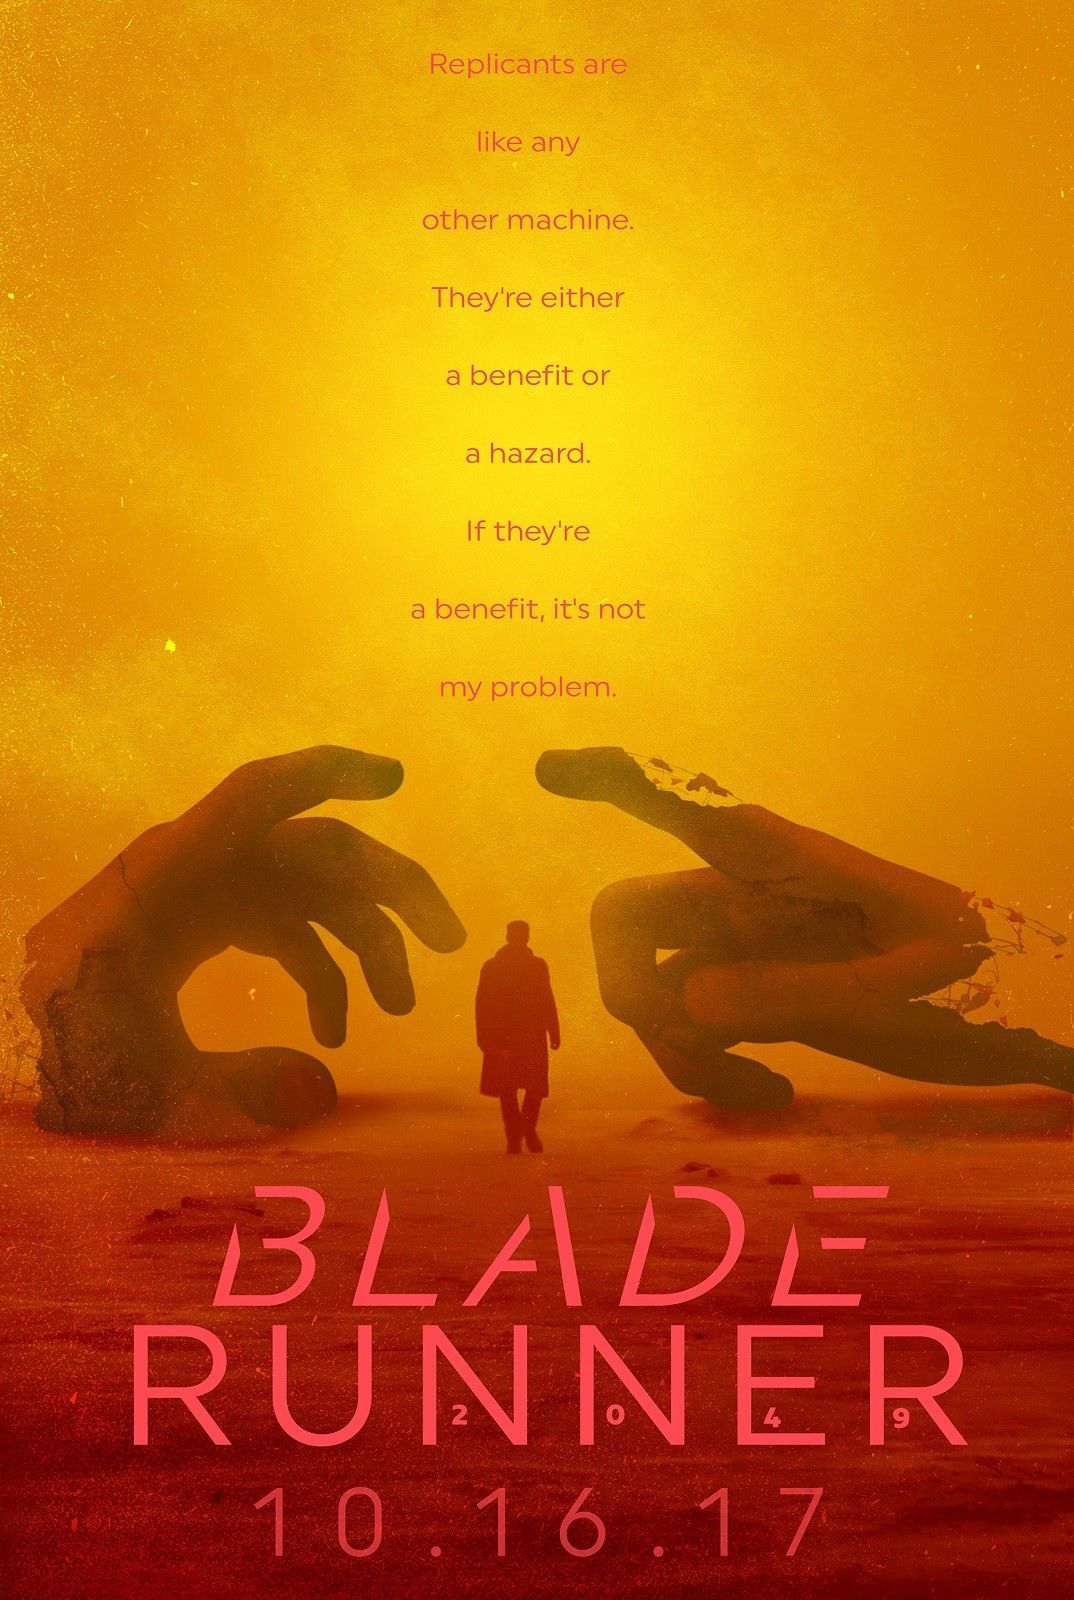 21 Blade Runner 49 Ryan Gosling Art Silk Print Poster 24x36inch60x90cm 018 From Chuy 10 93 Dhgate Com